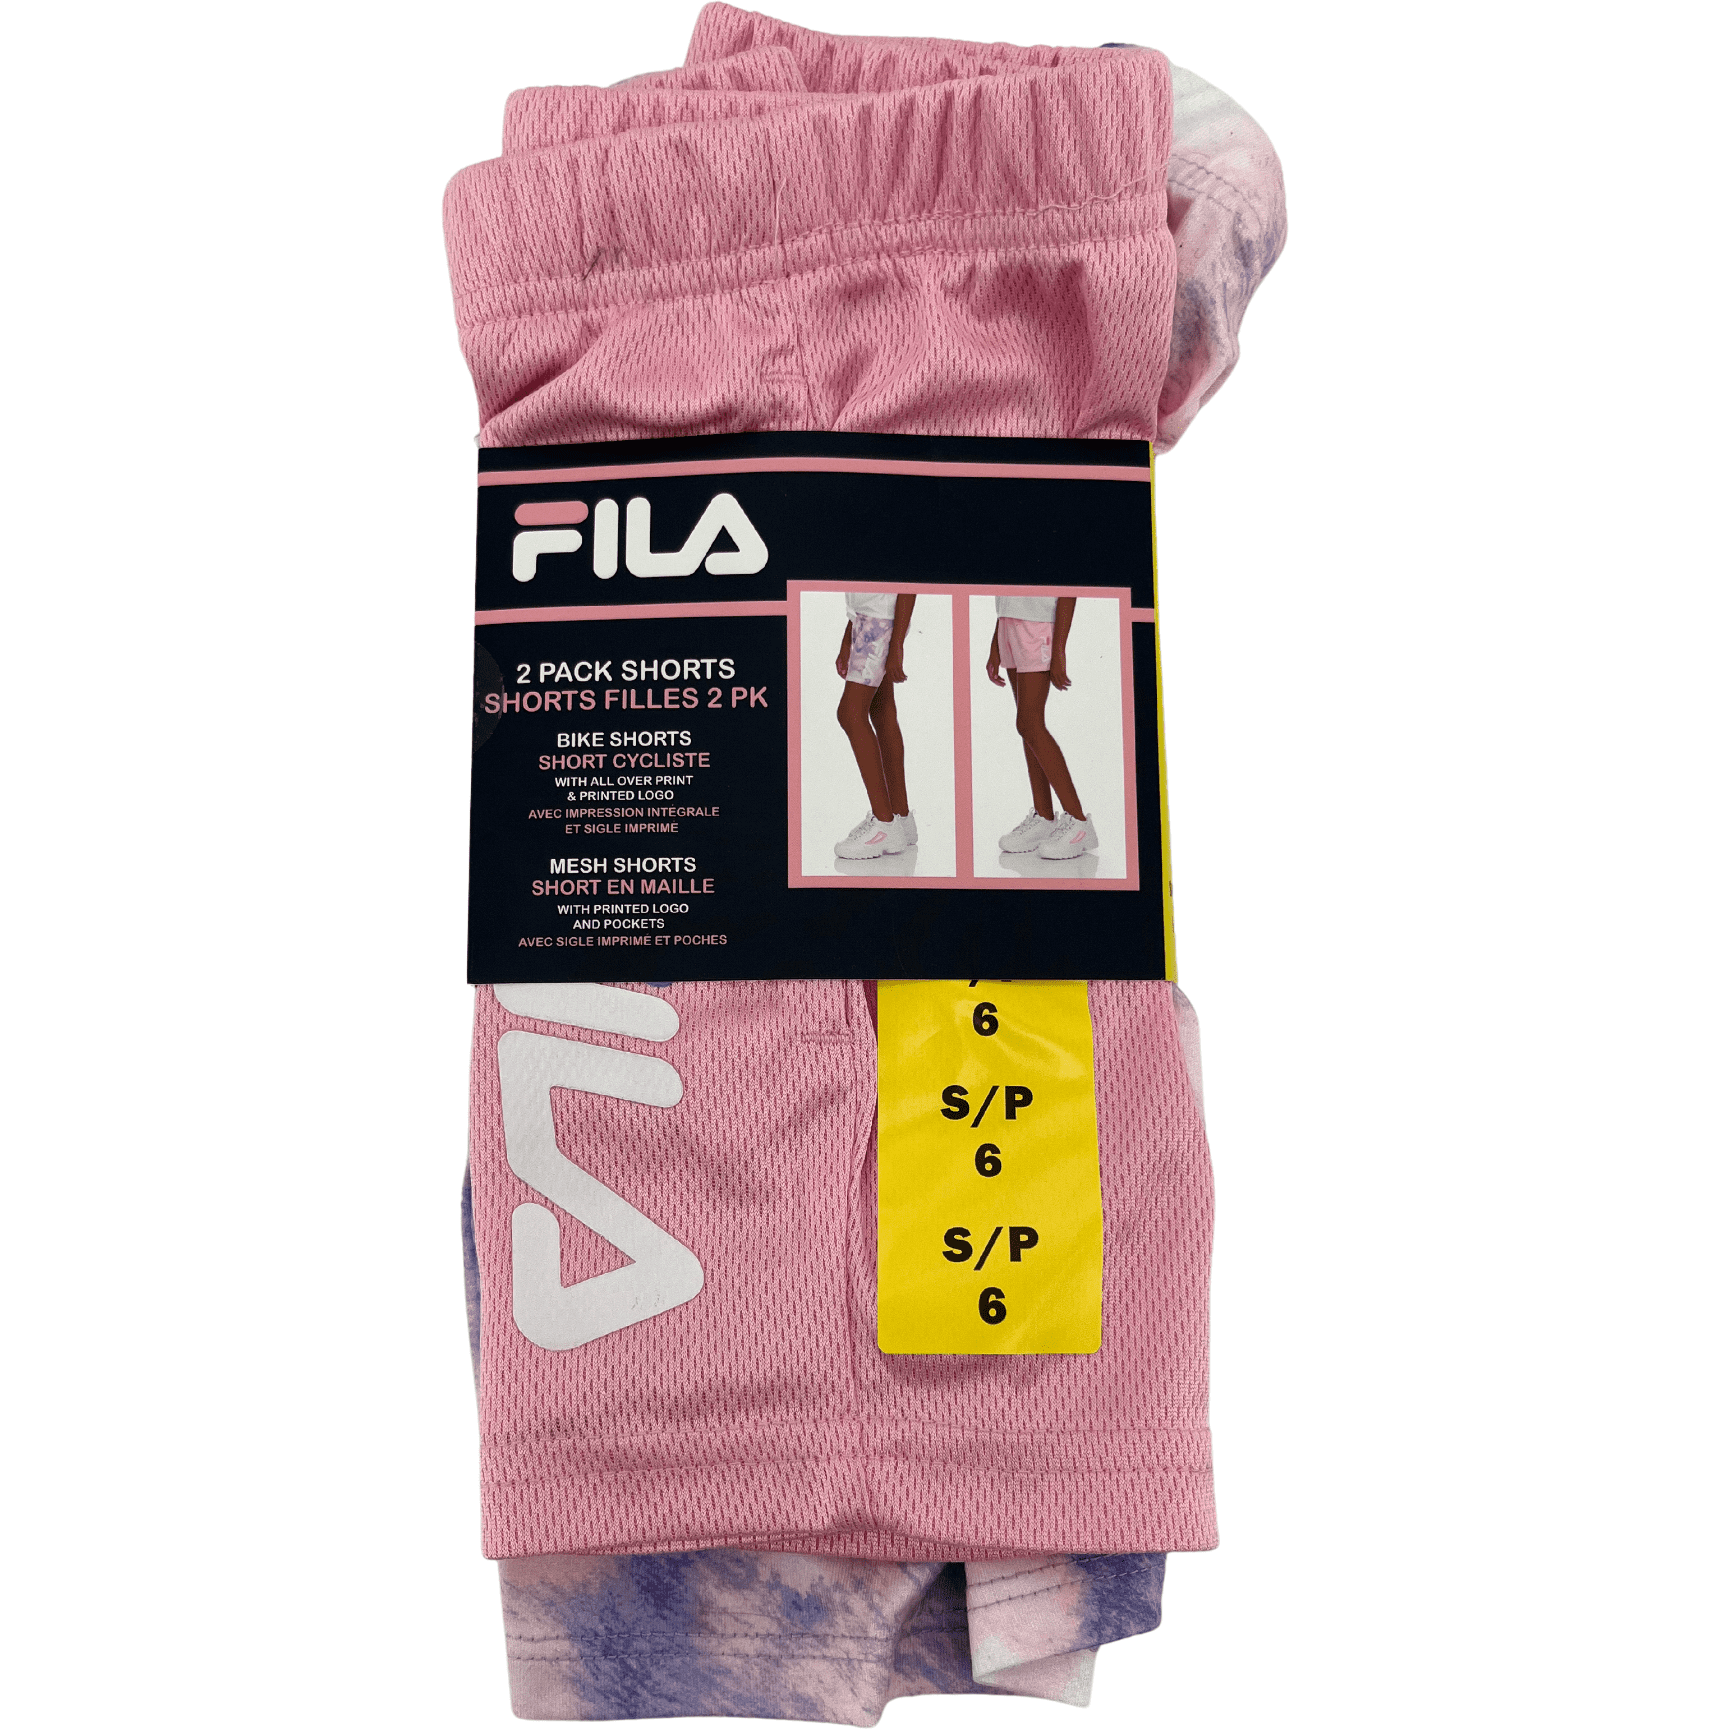 Fila Girl's Summer Shorts: Bike Shorts / Pink & Purple / 2 Pack / Size Small